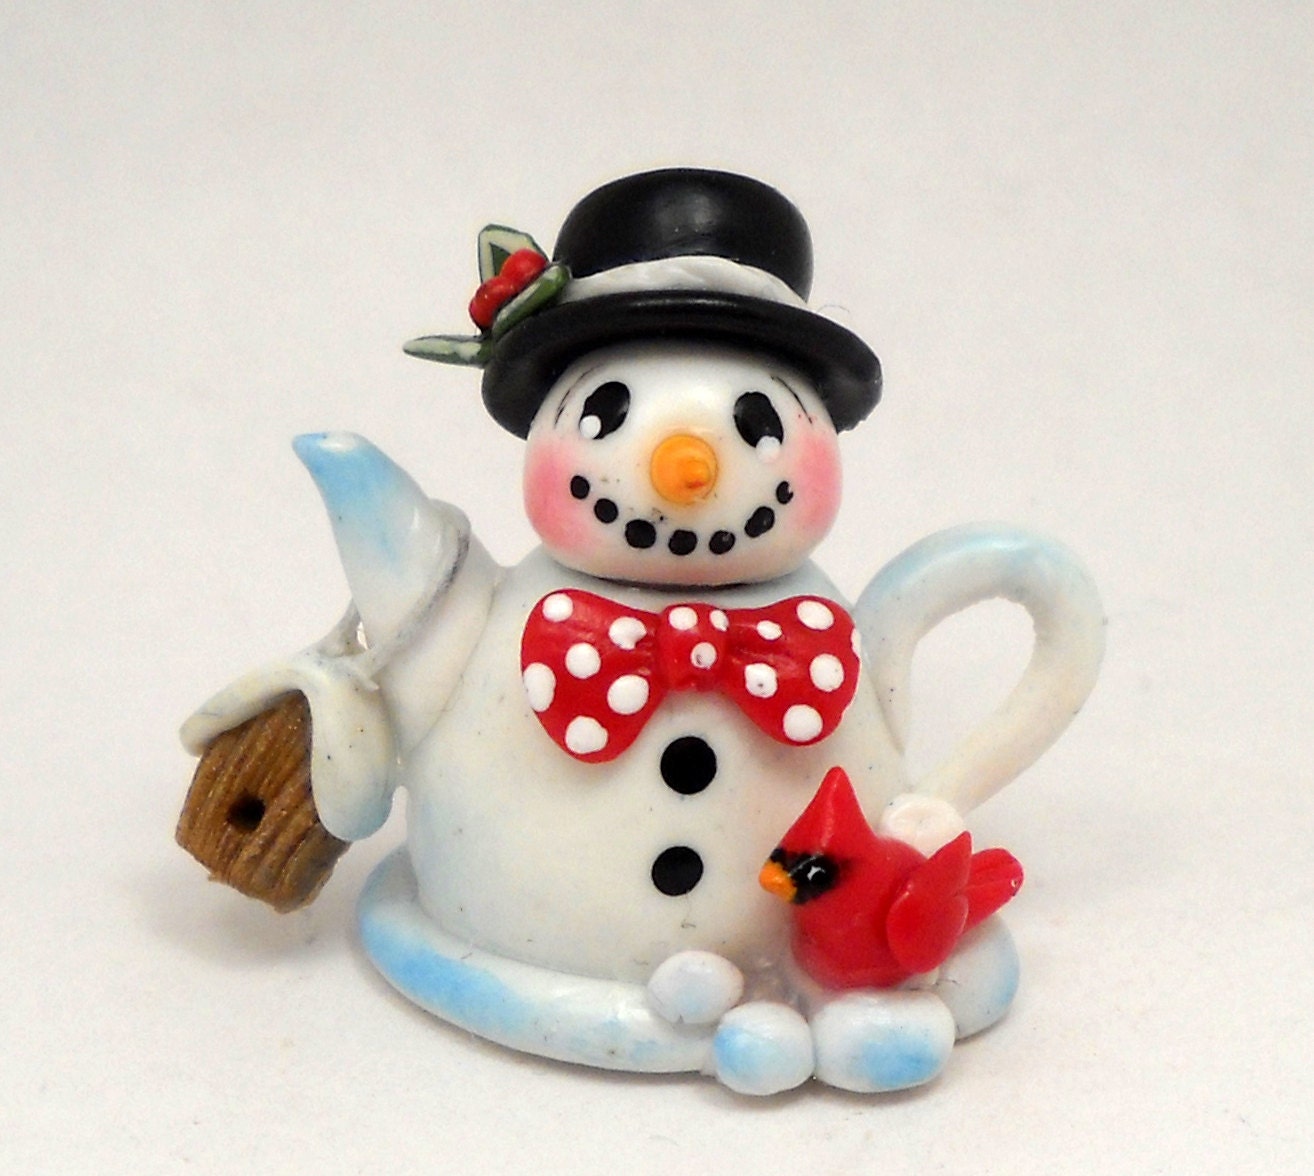 CDHM Artisan Loredana Tonetti of Lory's Tiny Creations, Christmas Snowman Teapot in 1:12 scale with cardinal and birdhouse